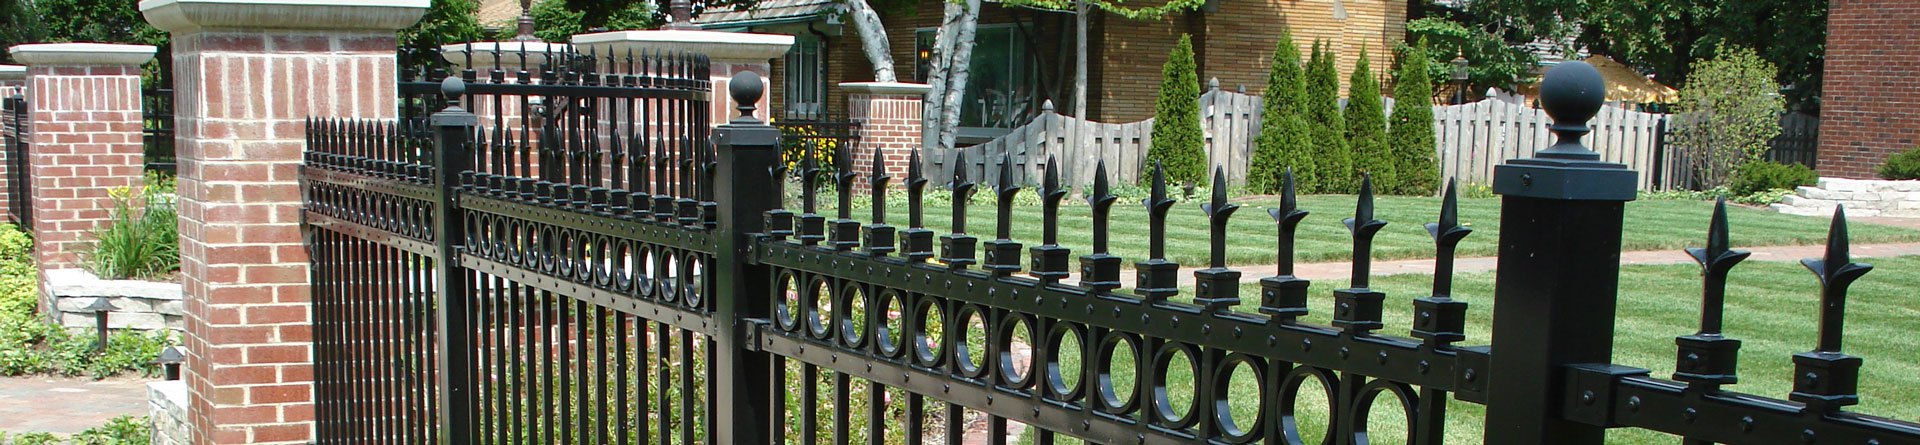 Wrought Iron Fence (Ornamental Iron Fence) - Affordable Fence & Gates